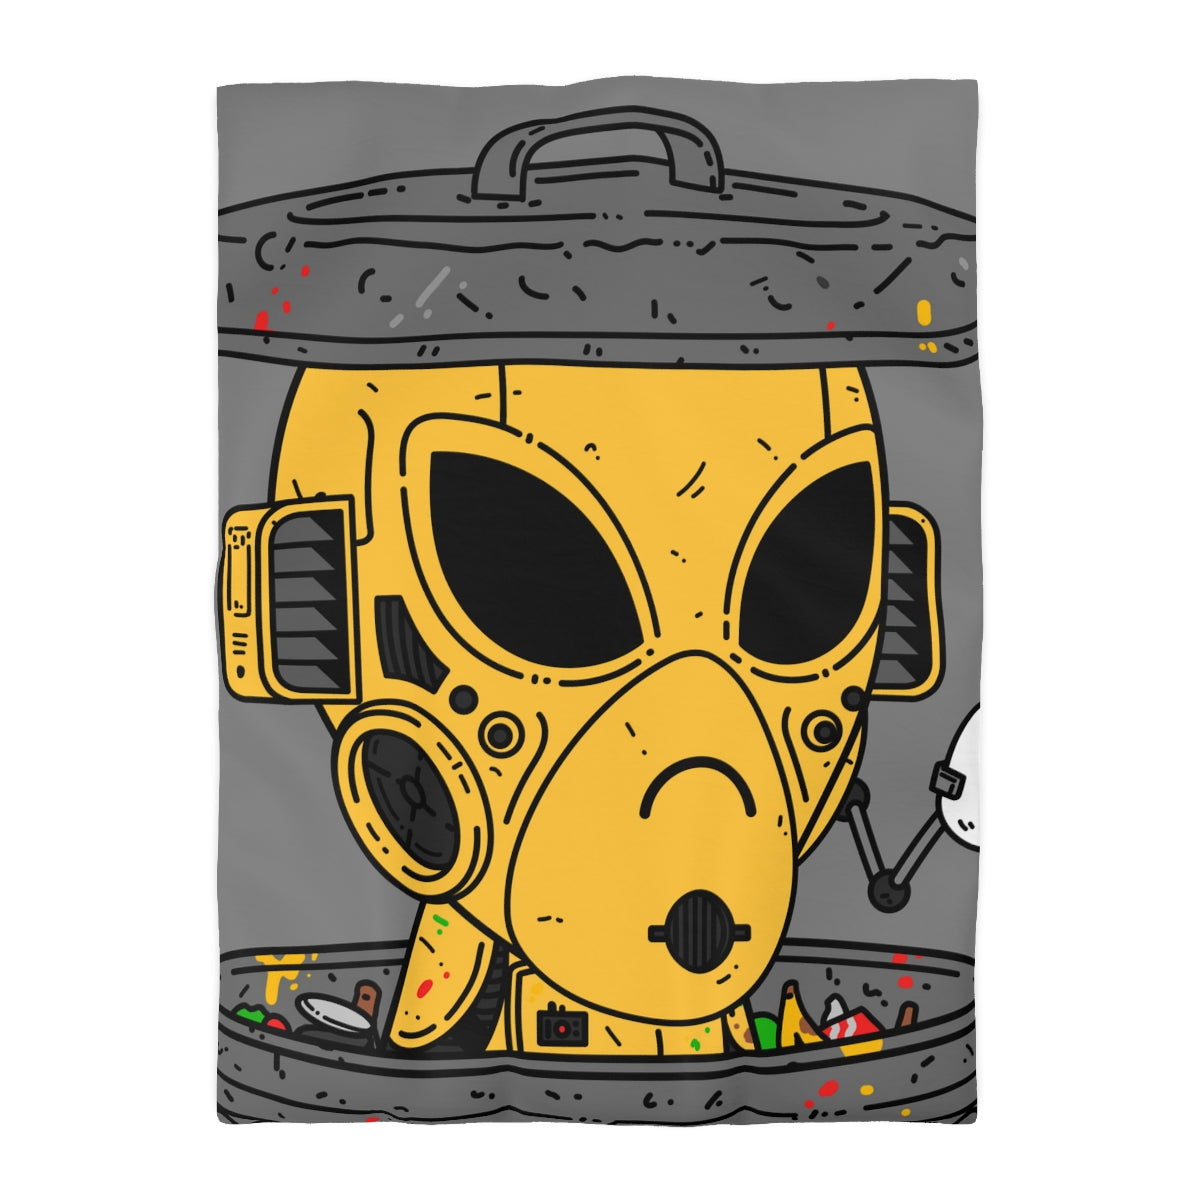 Trashcan Art Egg Armored Yellow Future Alien Cyborg Machine Visitor Microfiber Duvet Cover